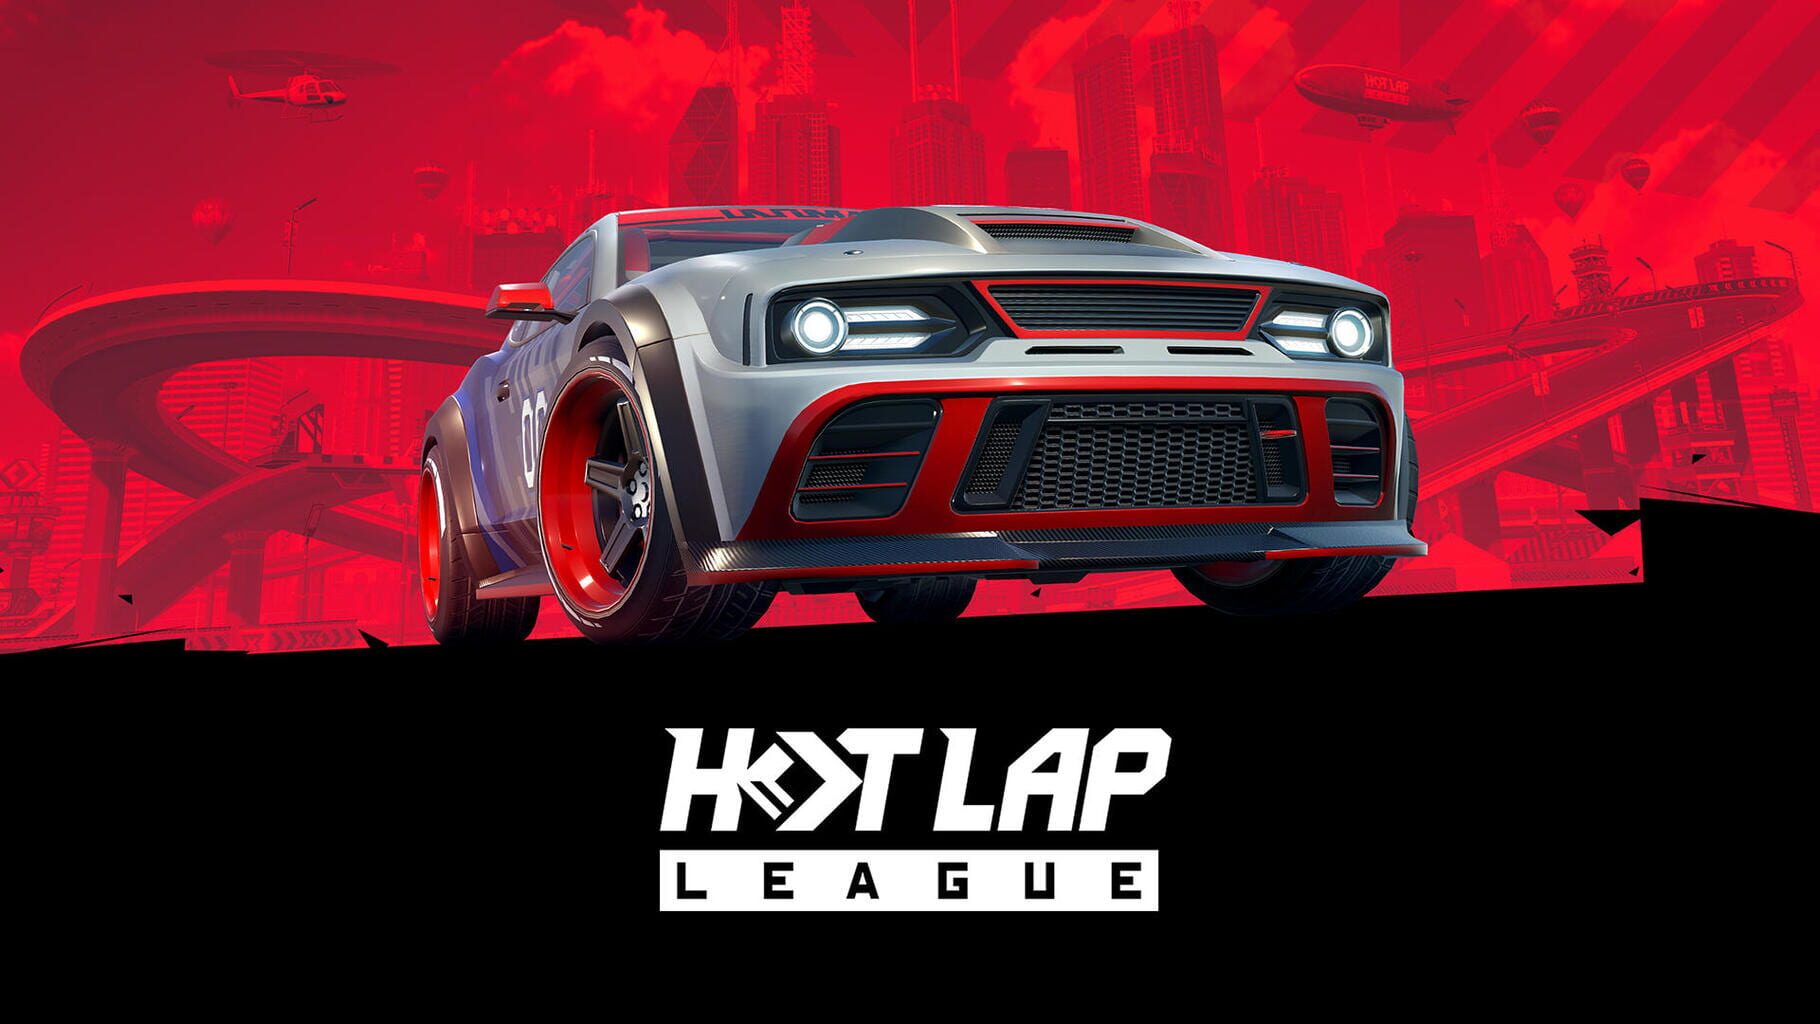 Hot Lap League artwork